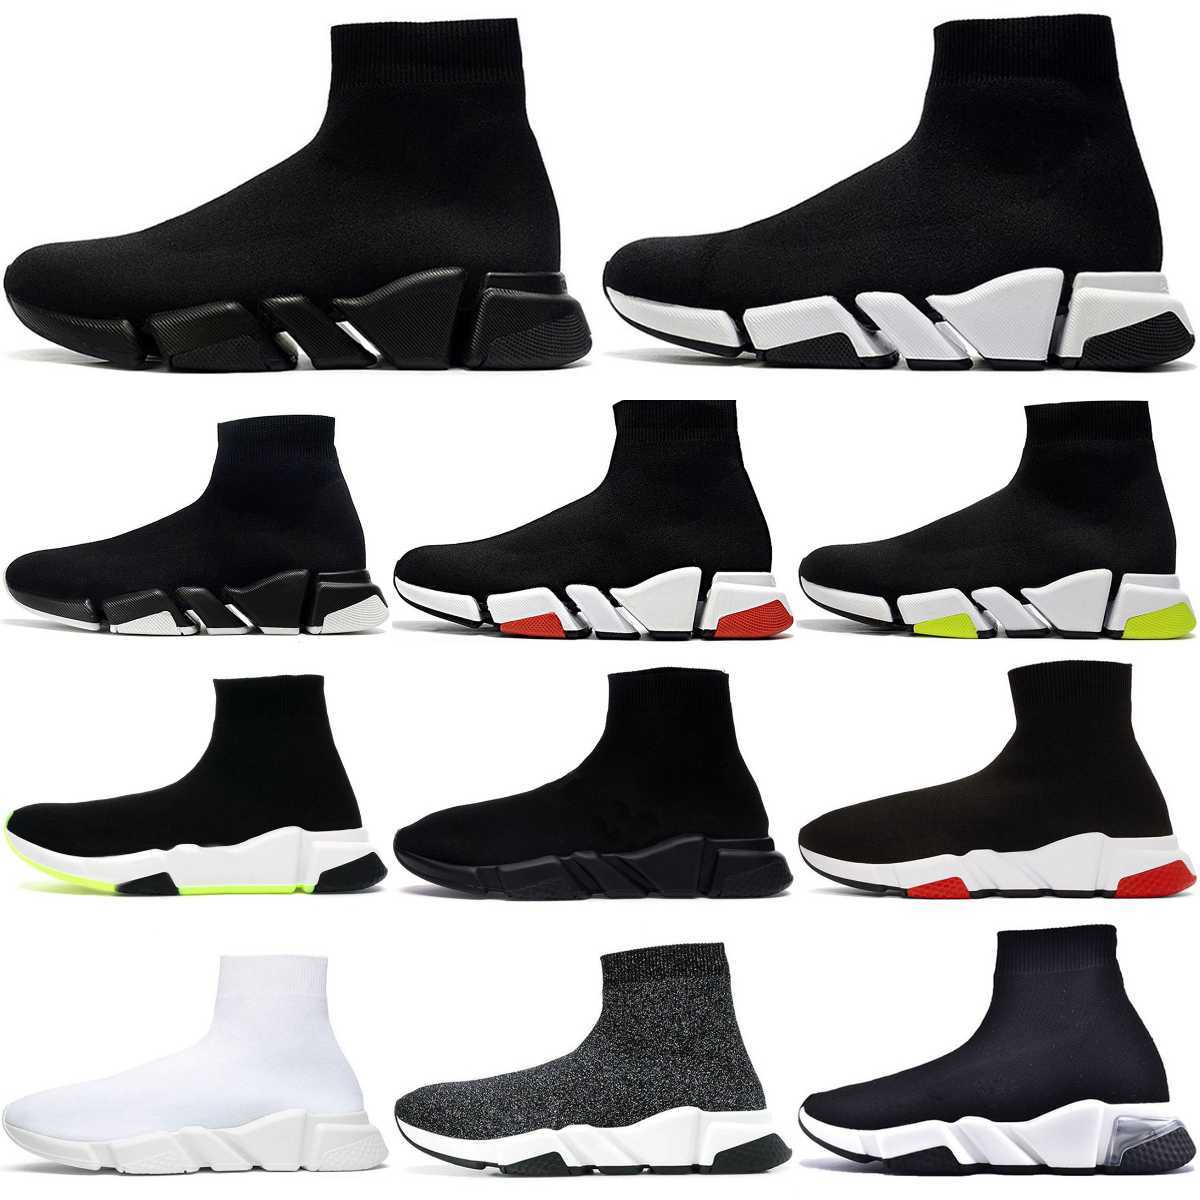 Trenerzy Speeds 2.0 V2 Buty Platforma Sneaker Men Men Kobiety Paris Socks Boots All Black White Blue Light Sliver Brown Ruby Graffiti Vintage Luksusowy projektant